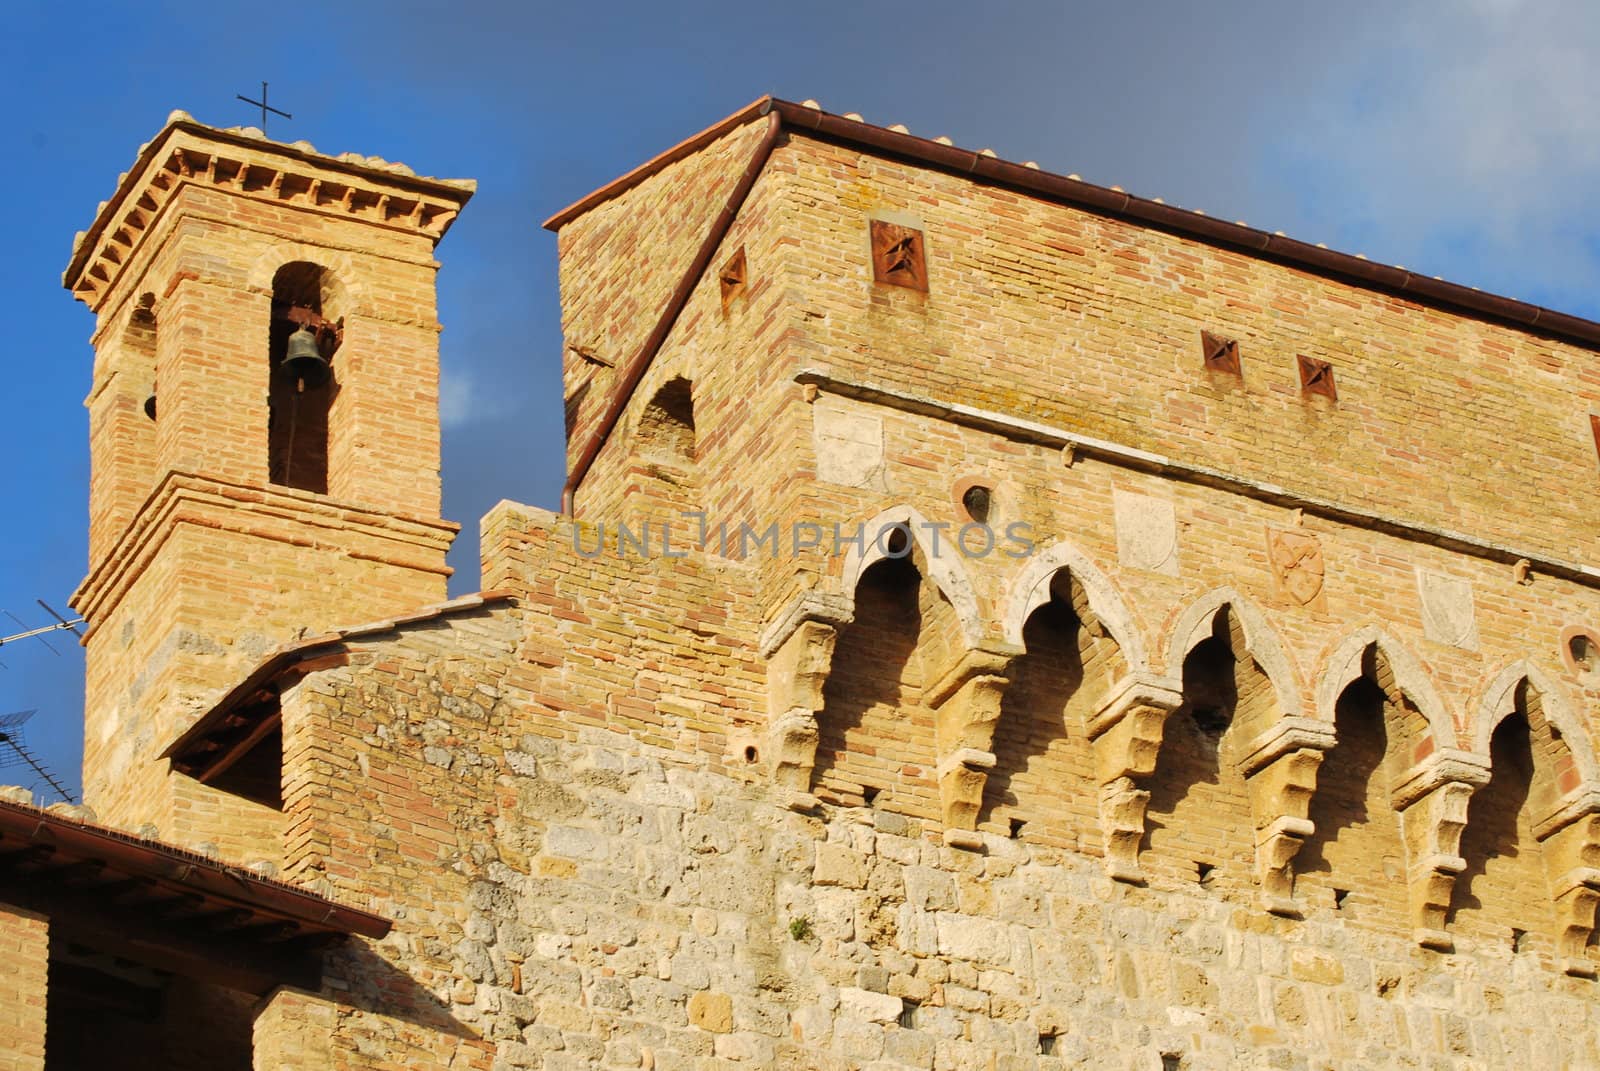 City walls of San Gimignano by mizio1970